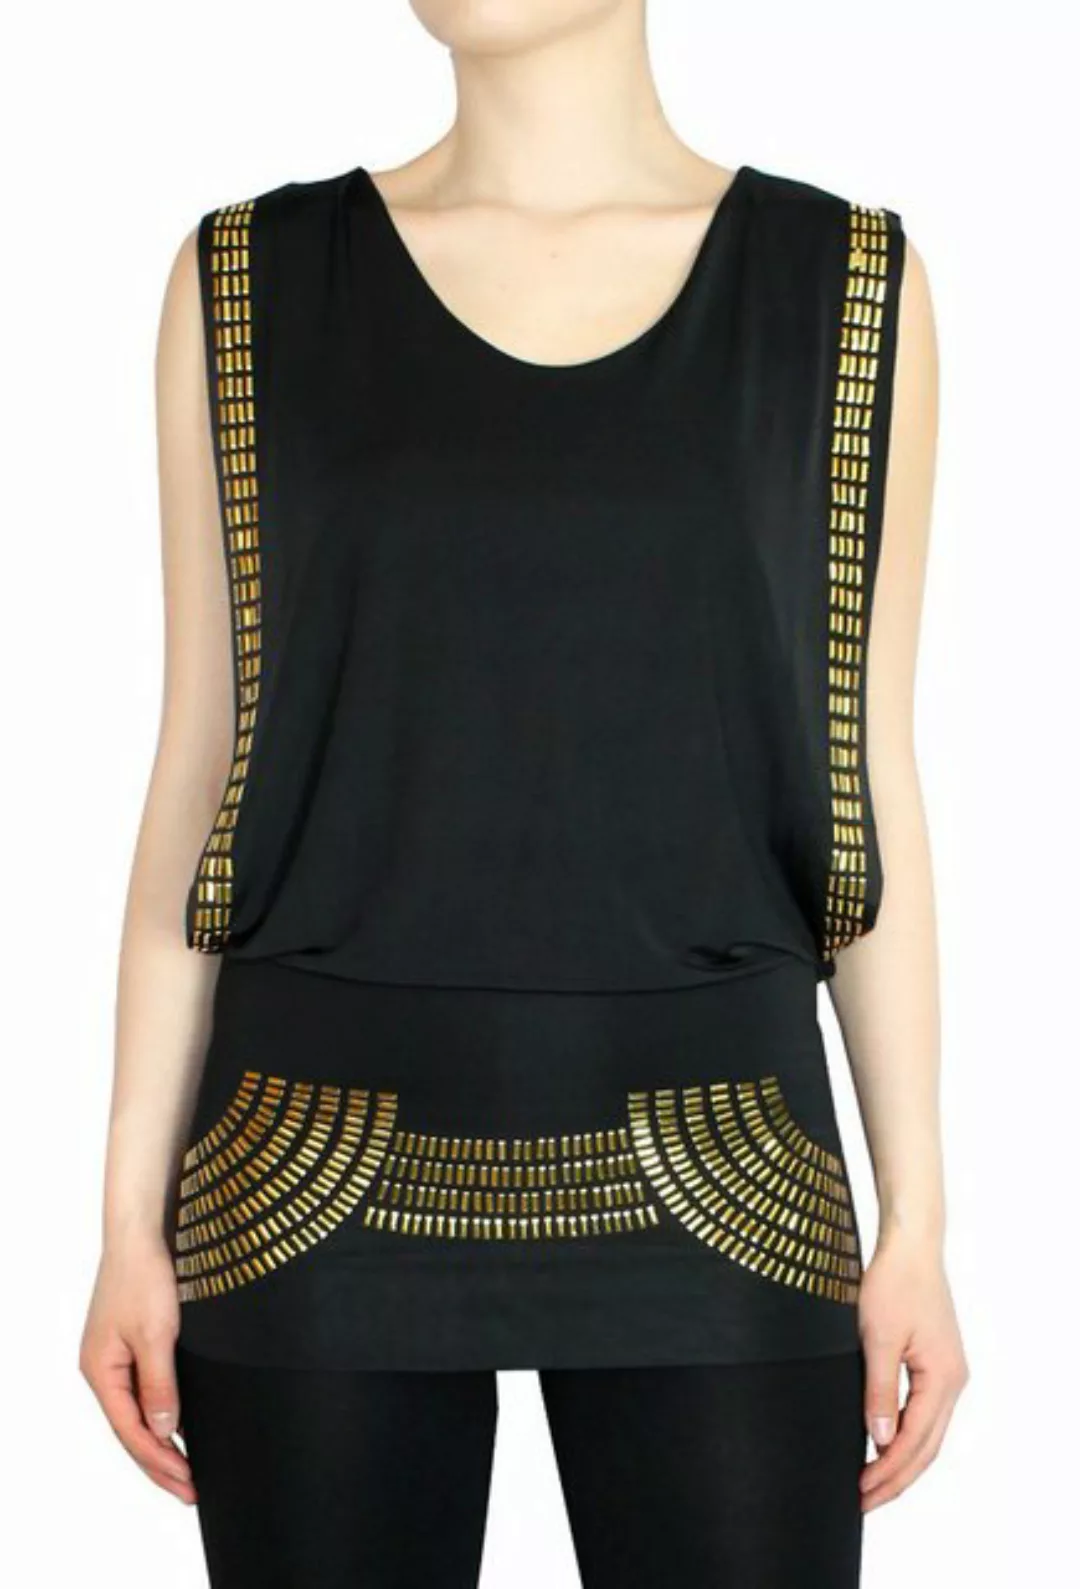 dy_mode Longtop Damen Long Top Mit Gold Glitzer Party Shirt Sommertop in Un günstig online kaufen